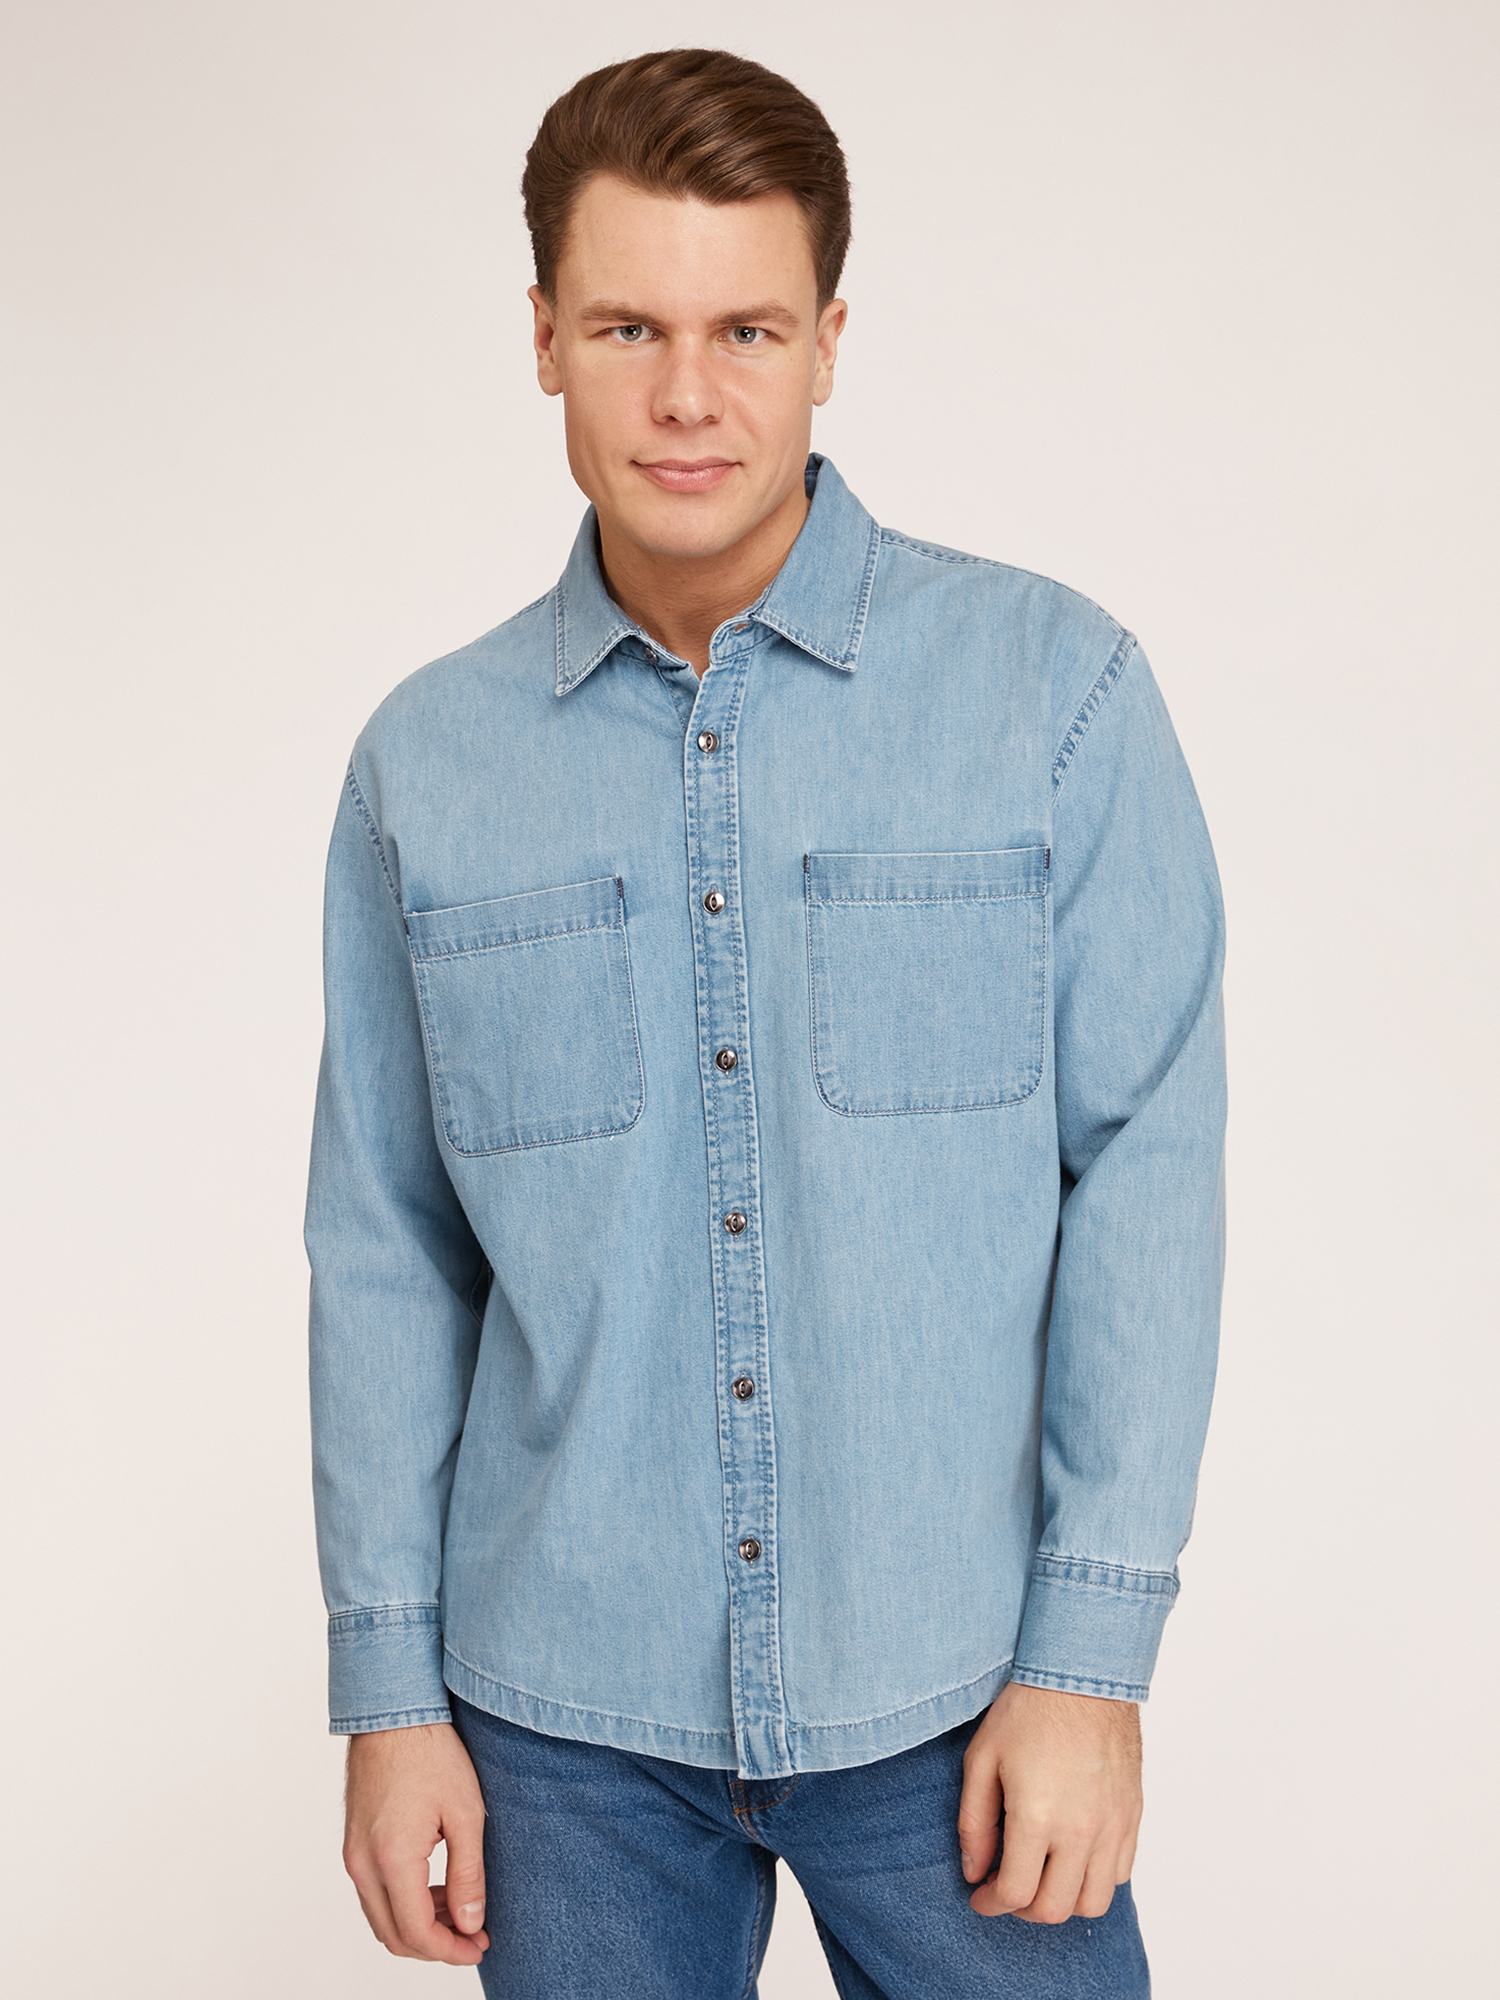 Джинсовая рубашка мужская oodji 6L430001M синяя XL